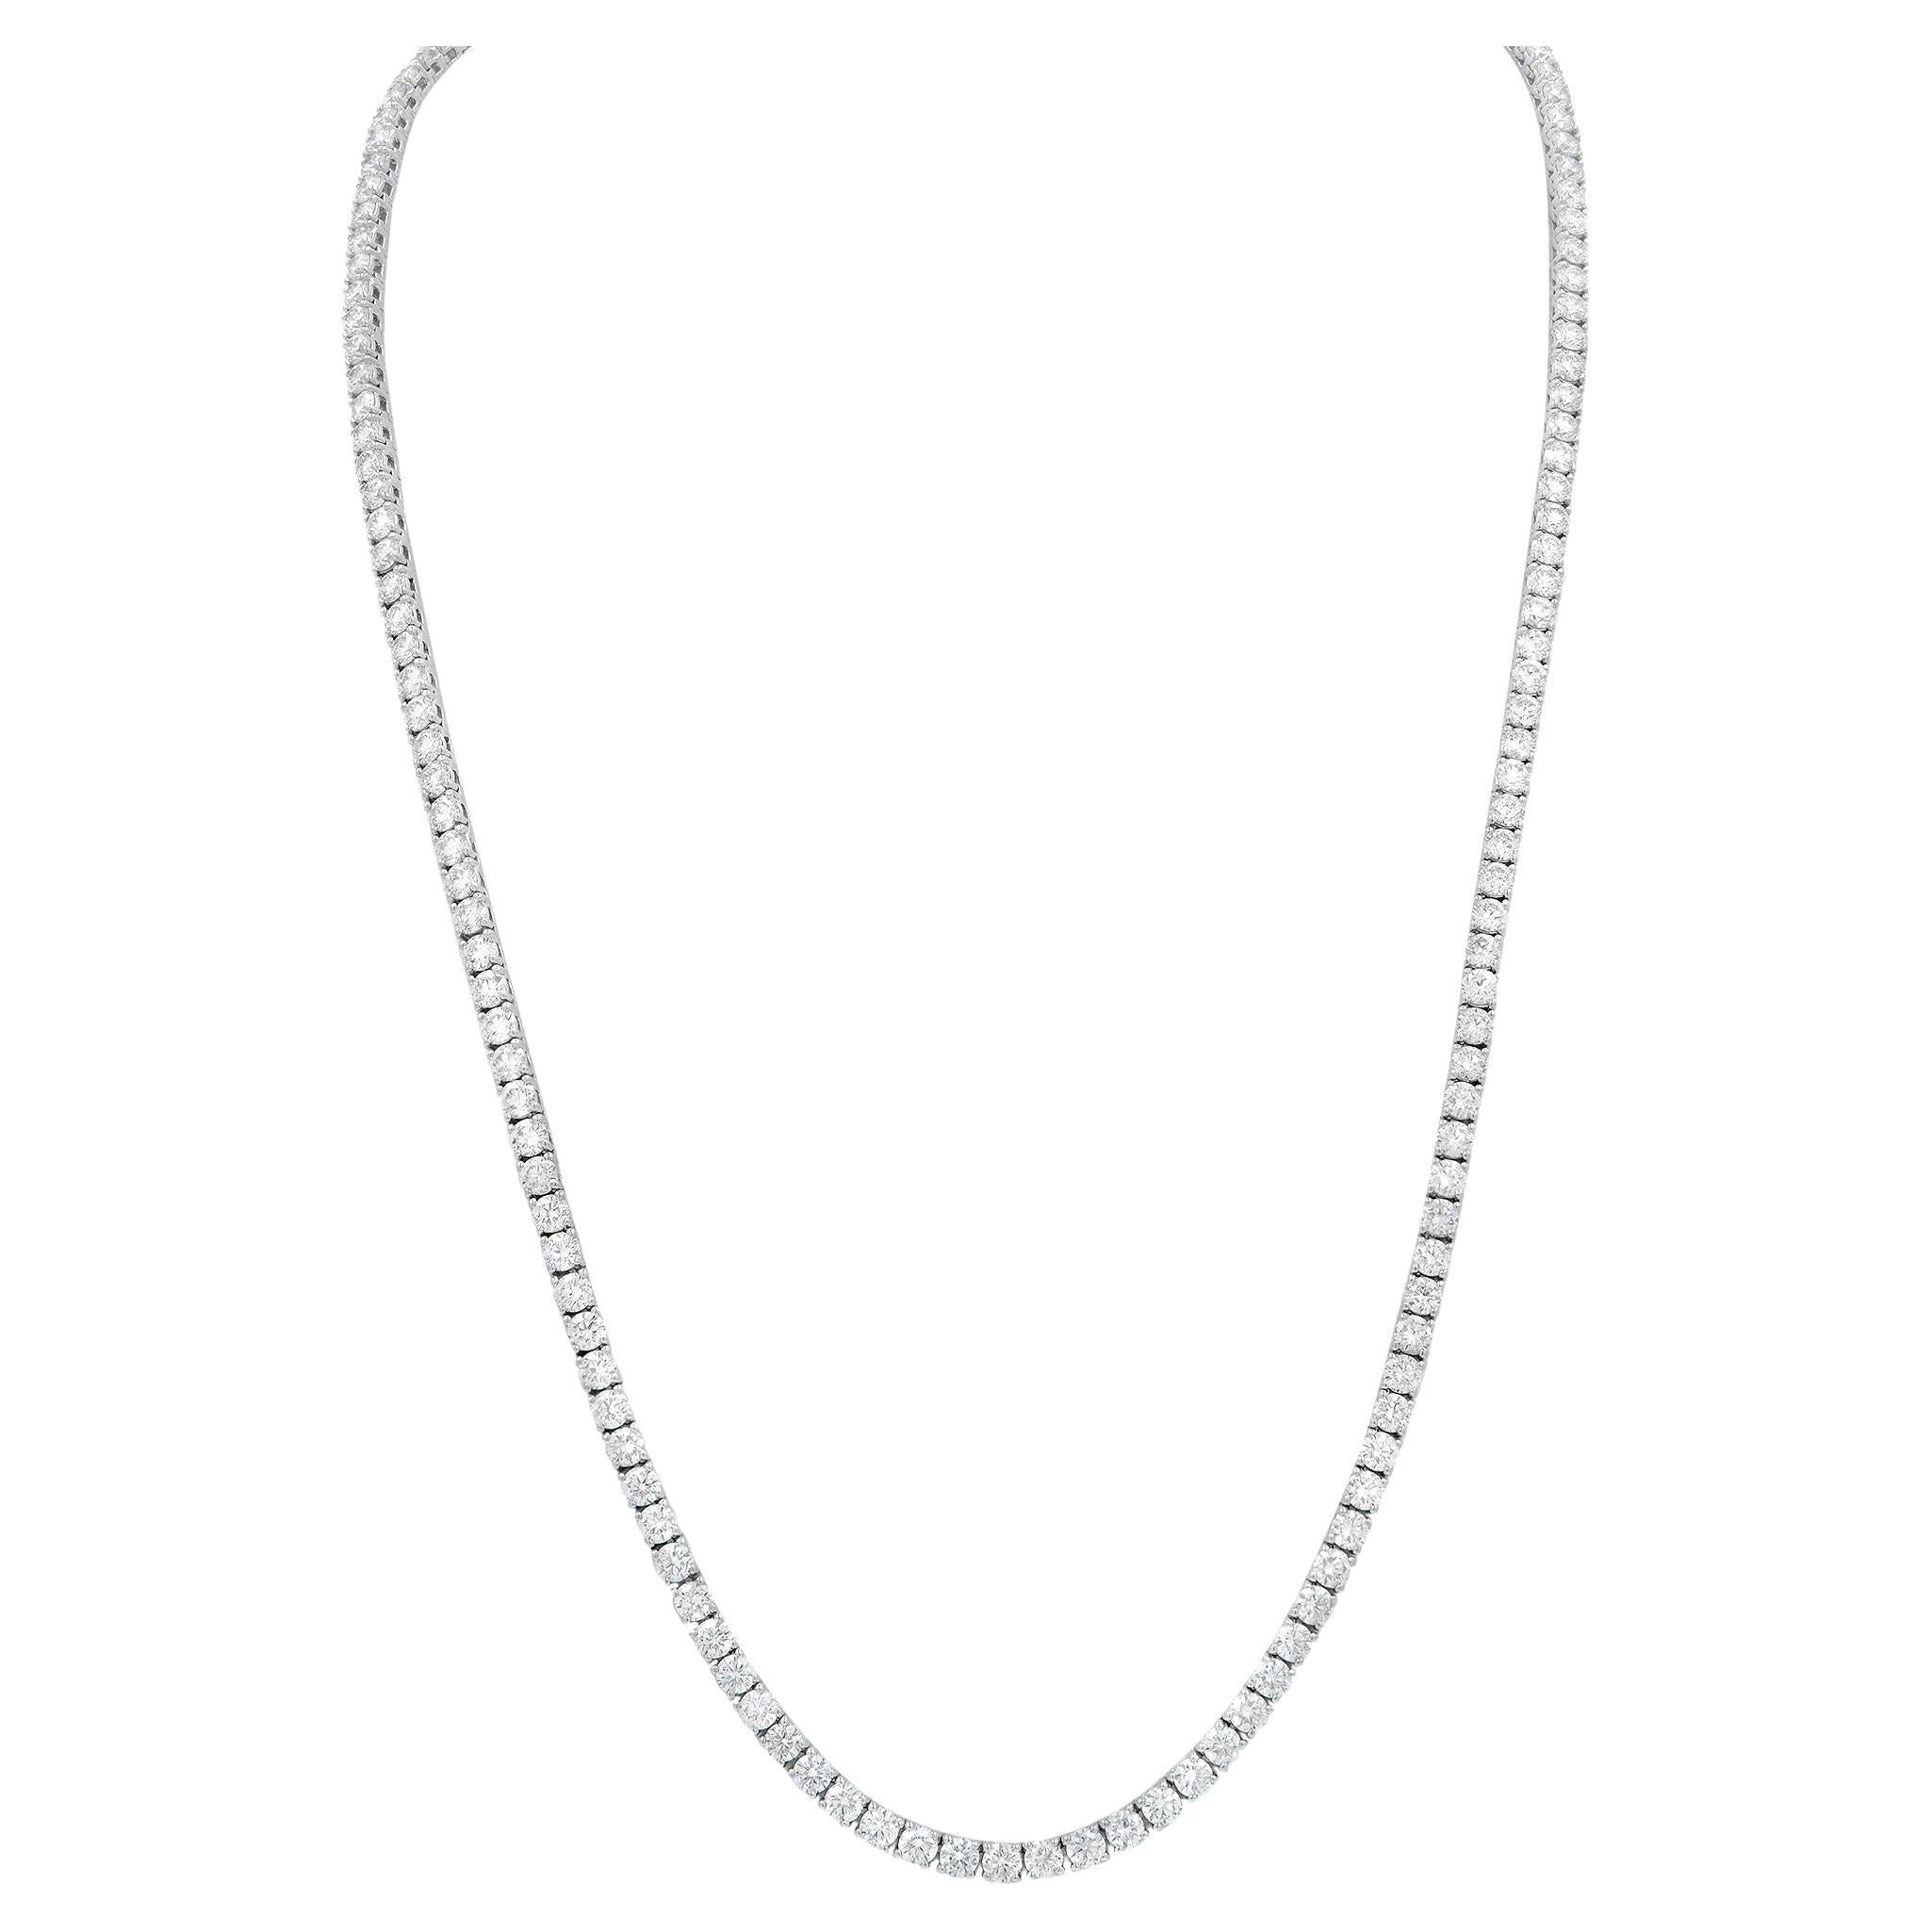 Rachel Koen Round Cut Diamond Tennis Necklace 14K White Gold 13.63Cttw 18 Inches